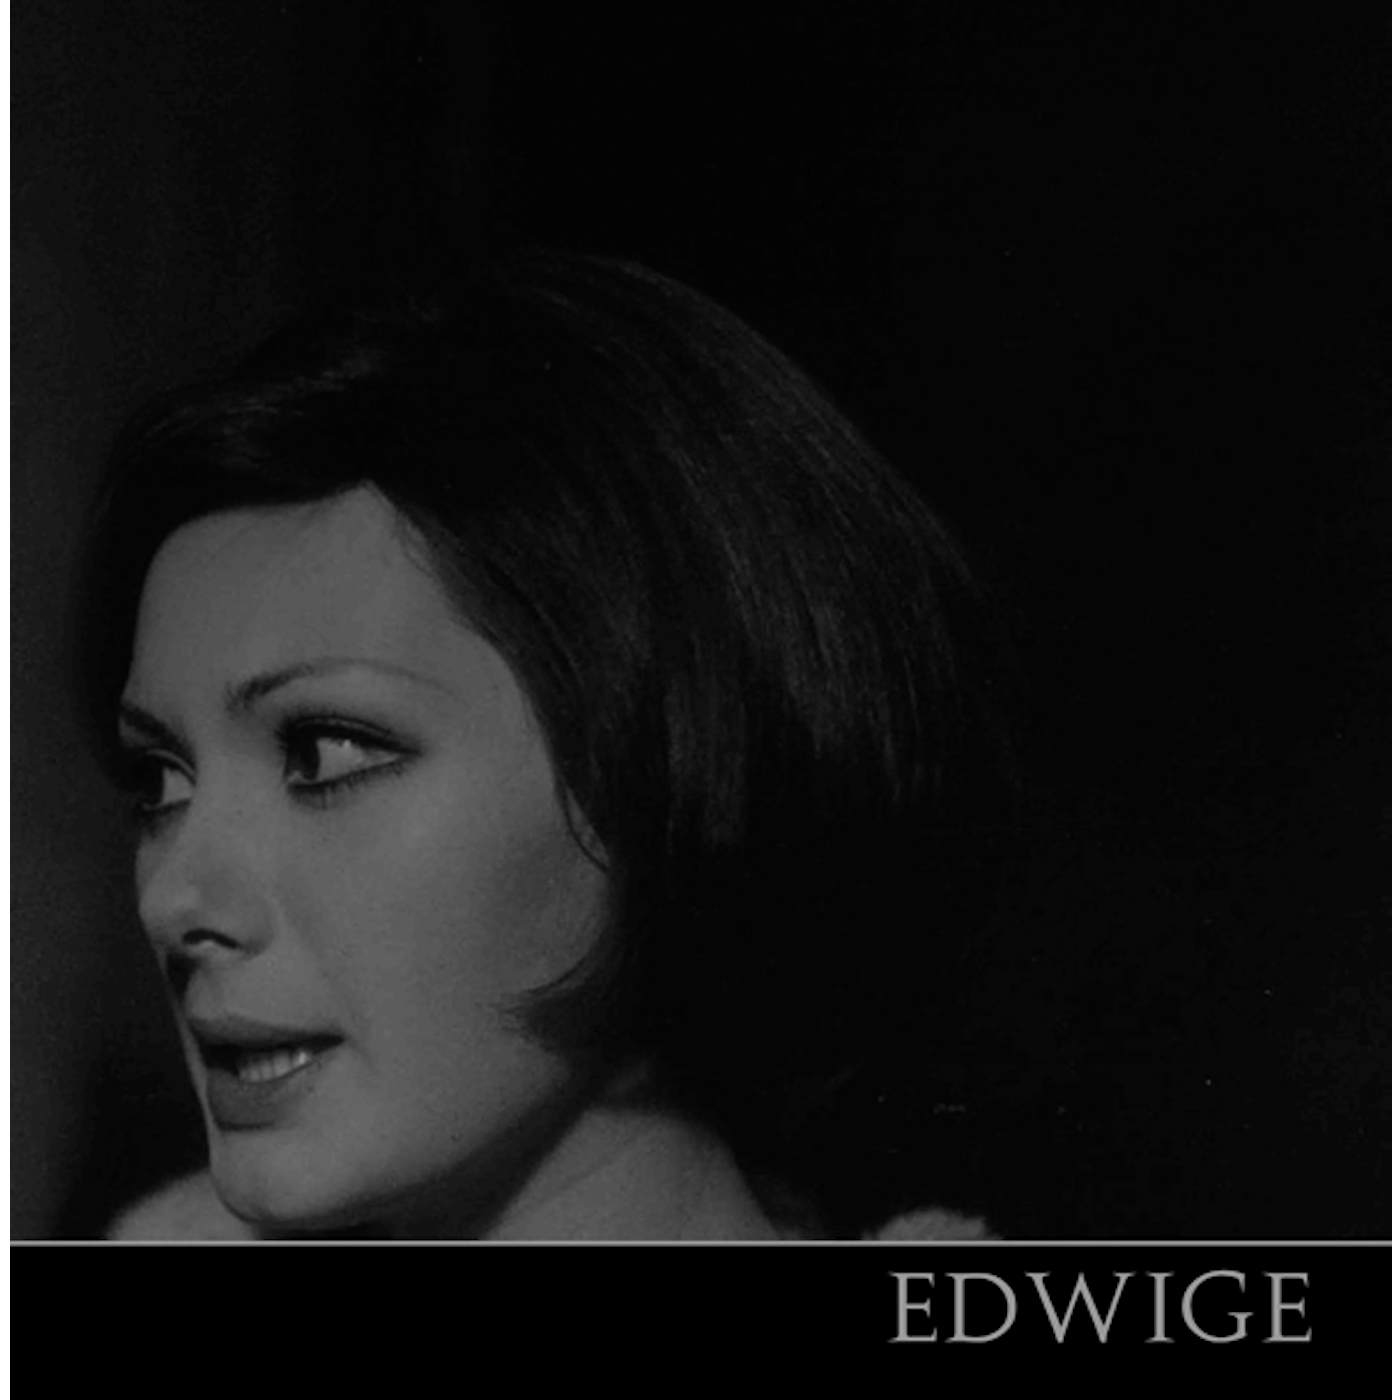 Edwige Vinyl Record